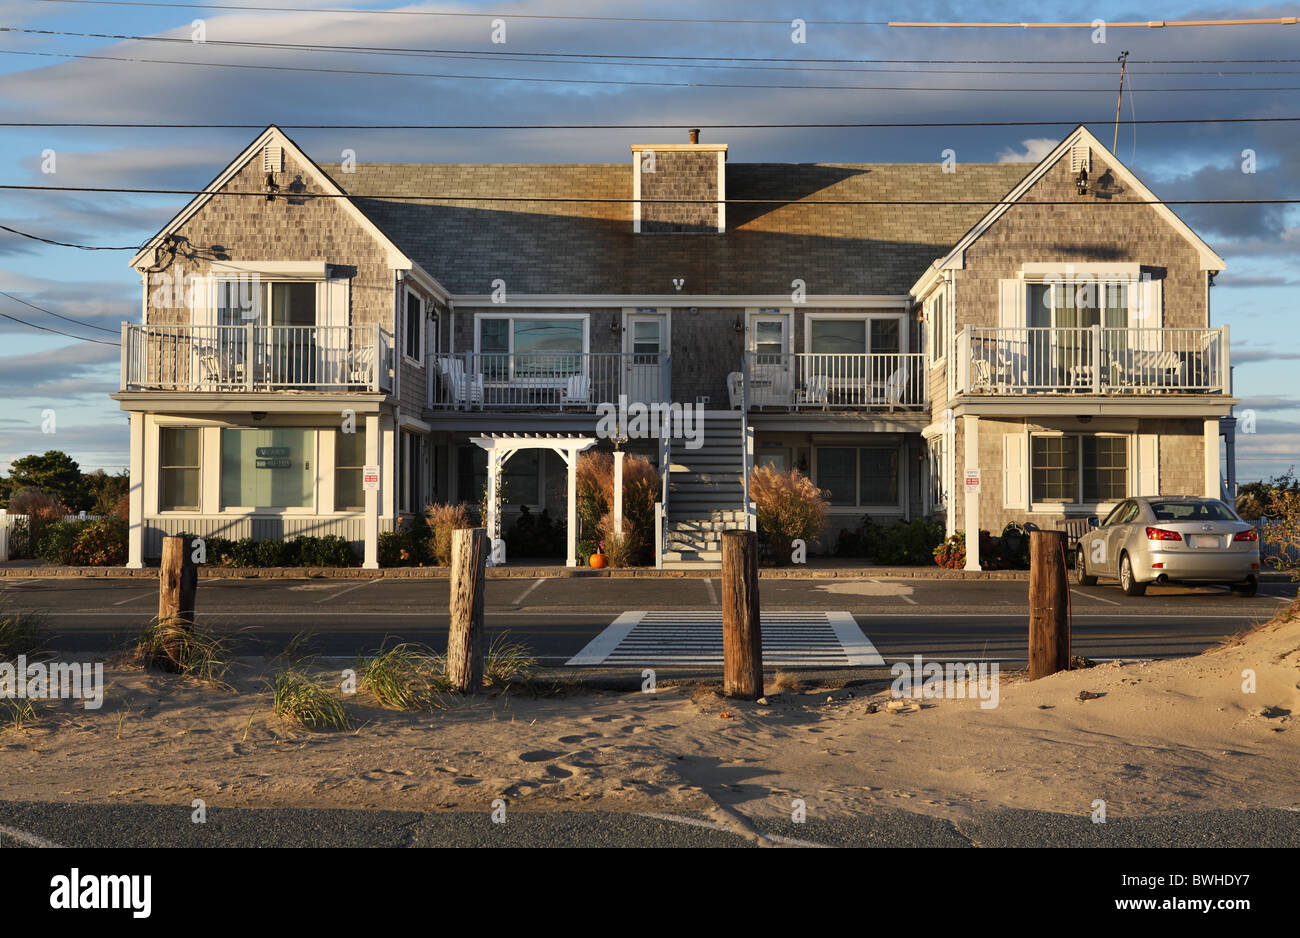 The Ocean View Motel seen in evening light, Craigville Beach, Barnstable, Massachusetts, USA Stock Photo